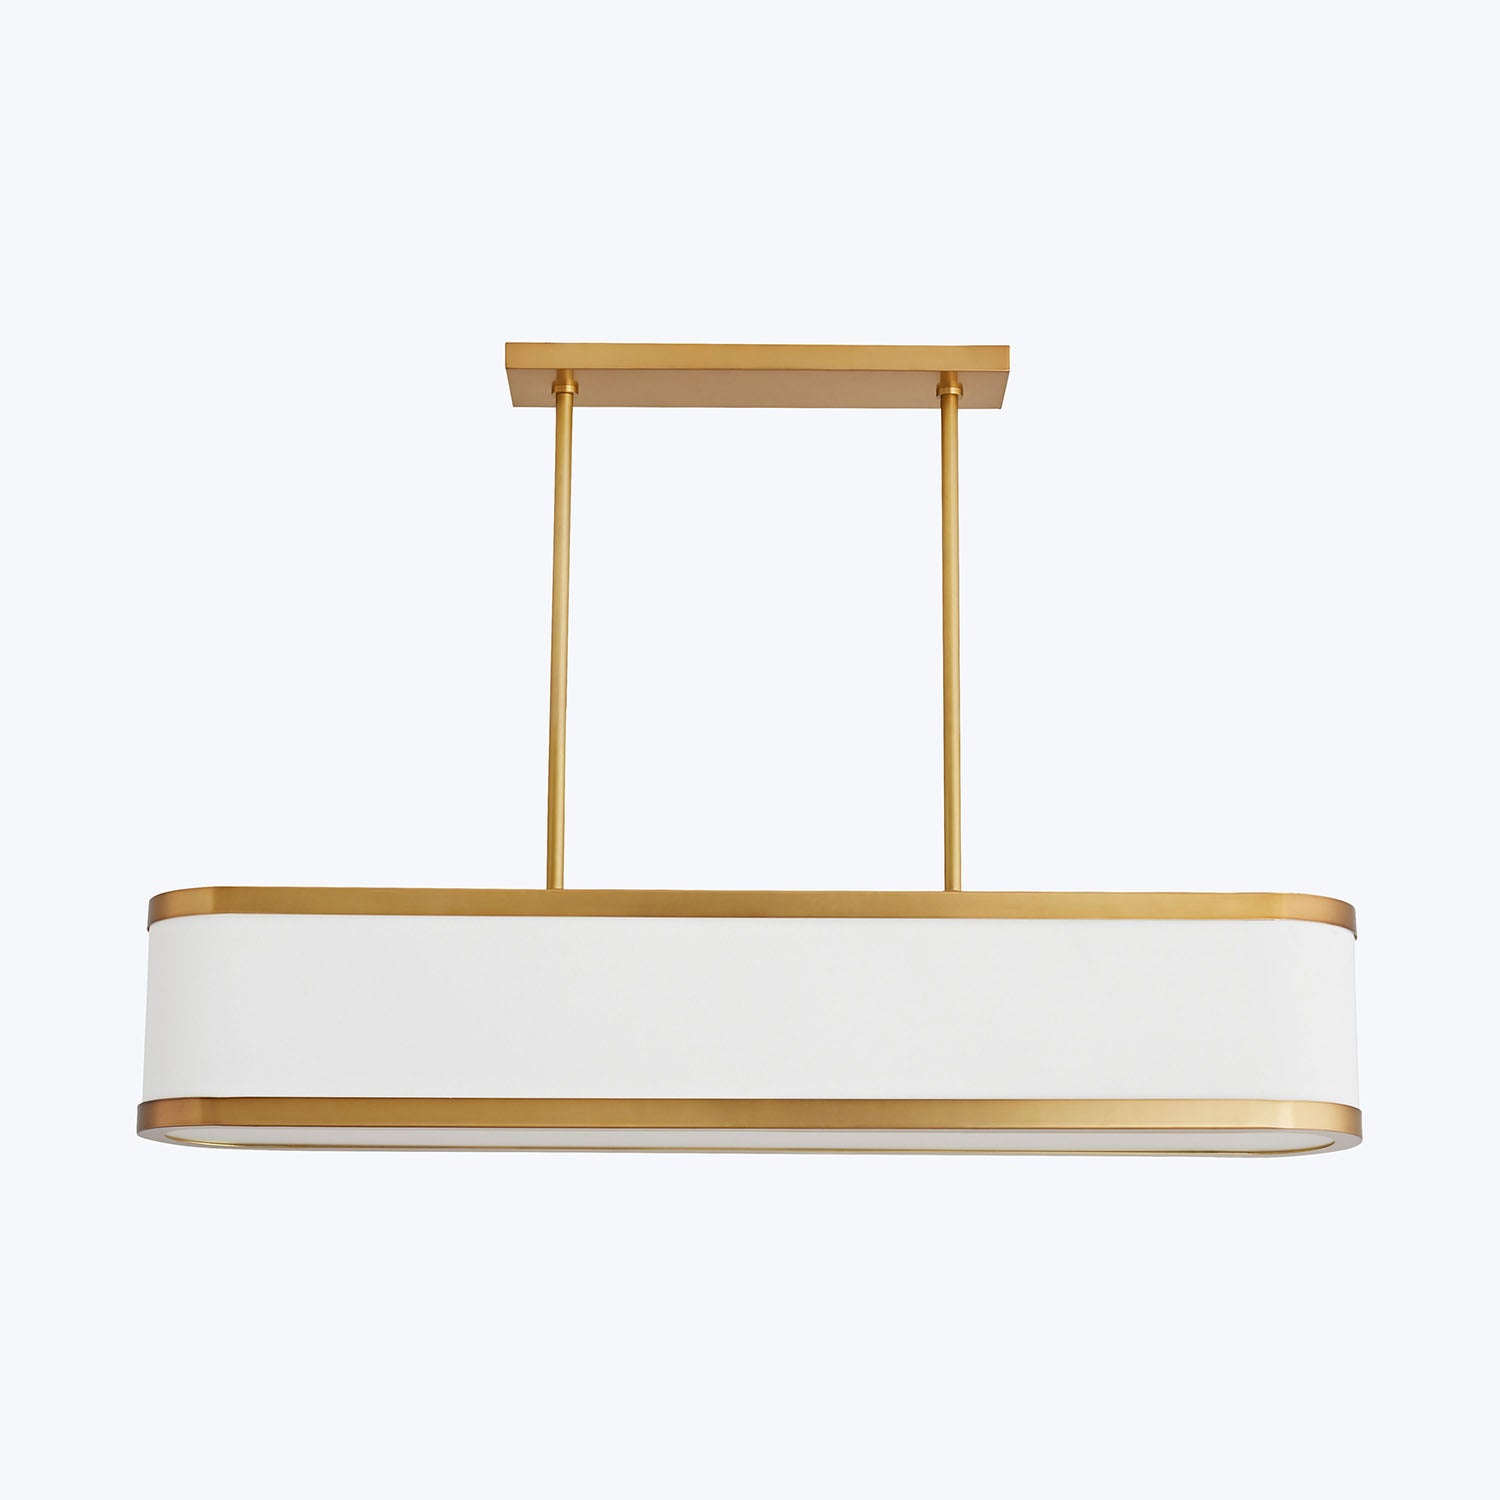 Sleek and minimalist pendant light fixture with elegant gold accents.